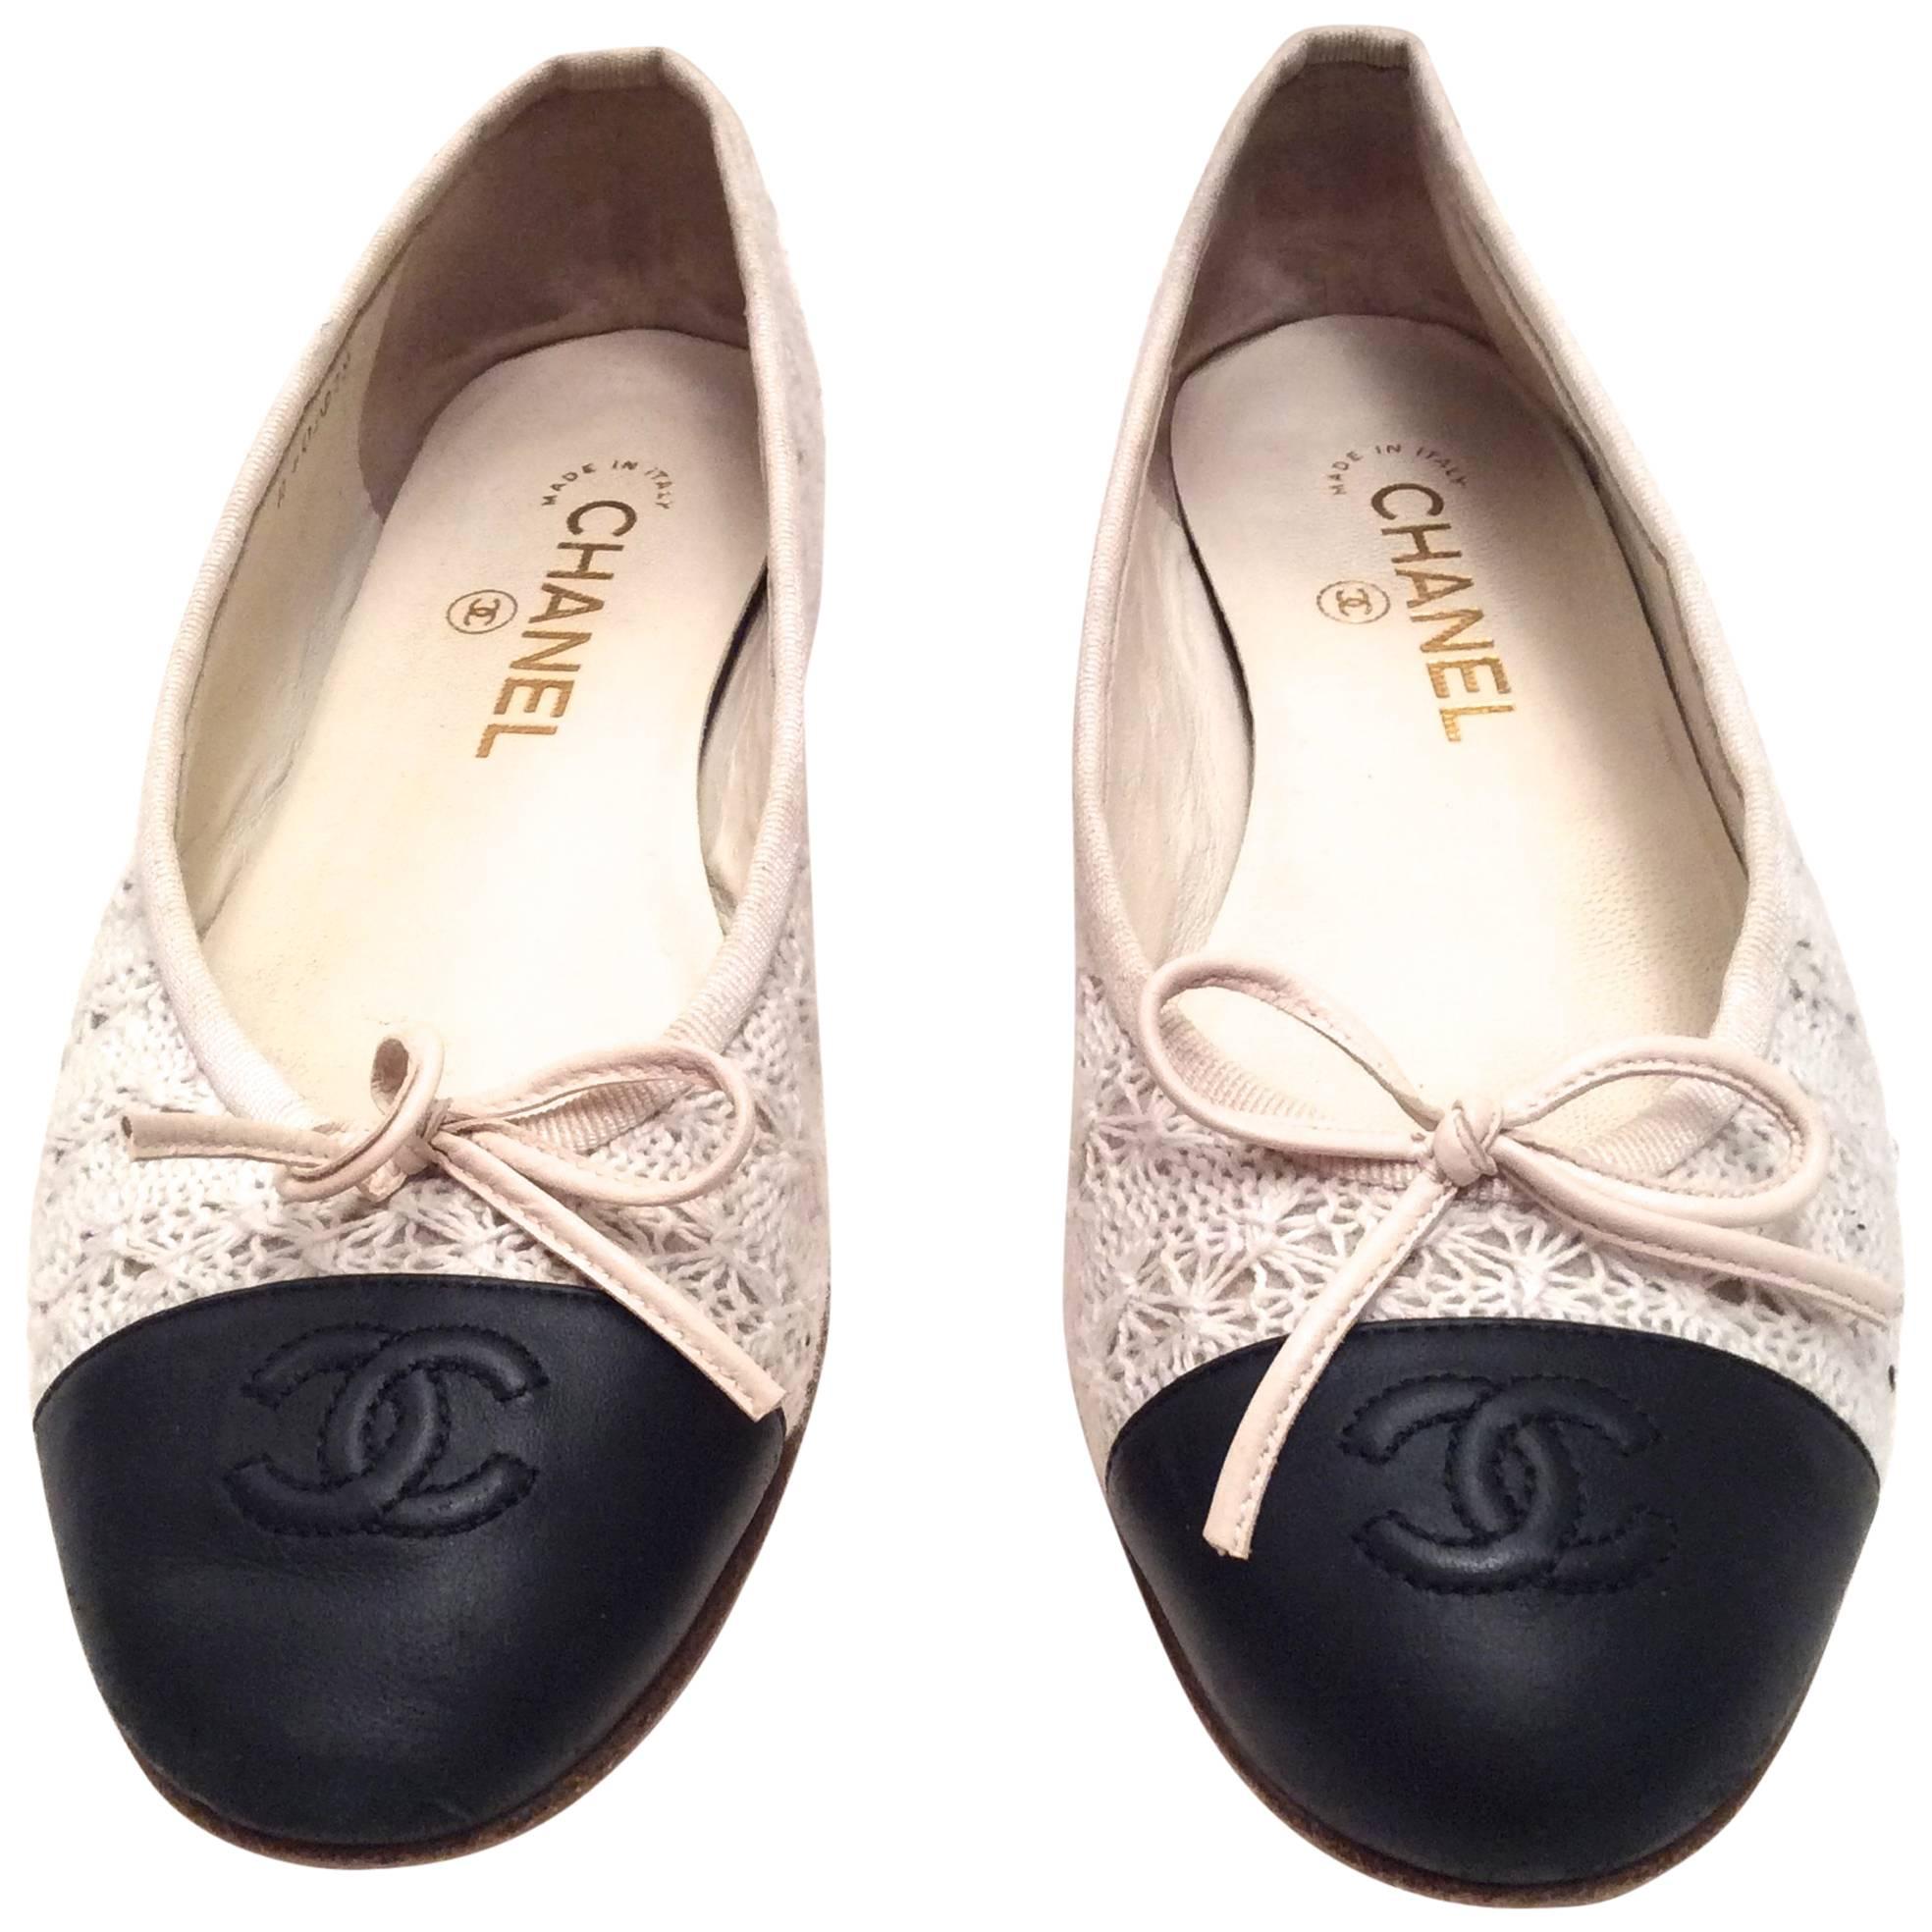 Chanel Ballerina Flats - Size 38 